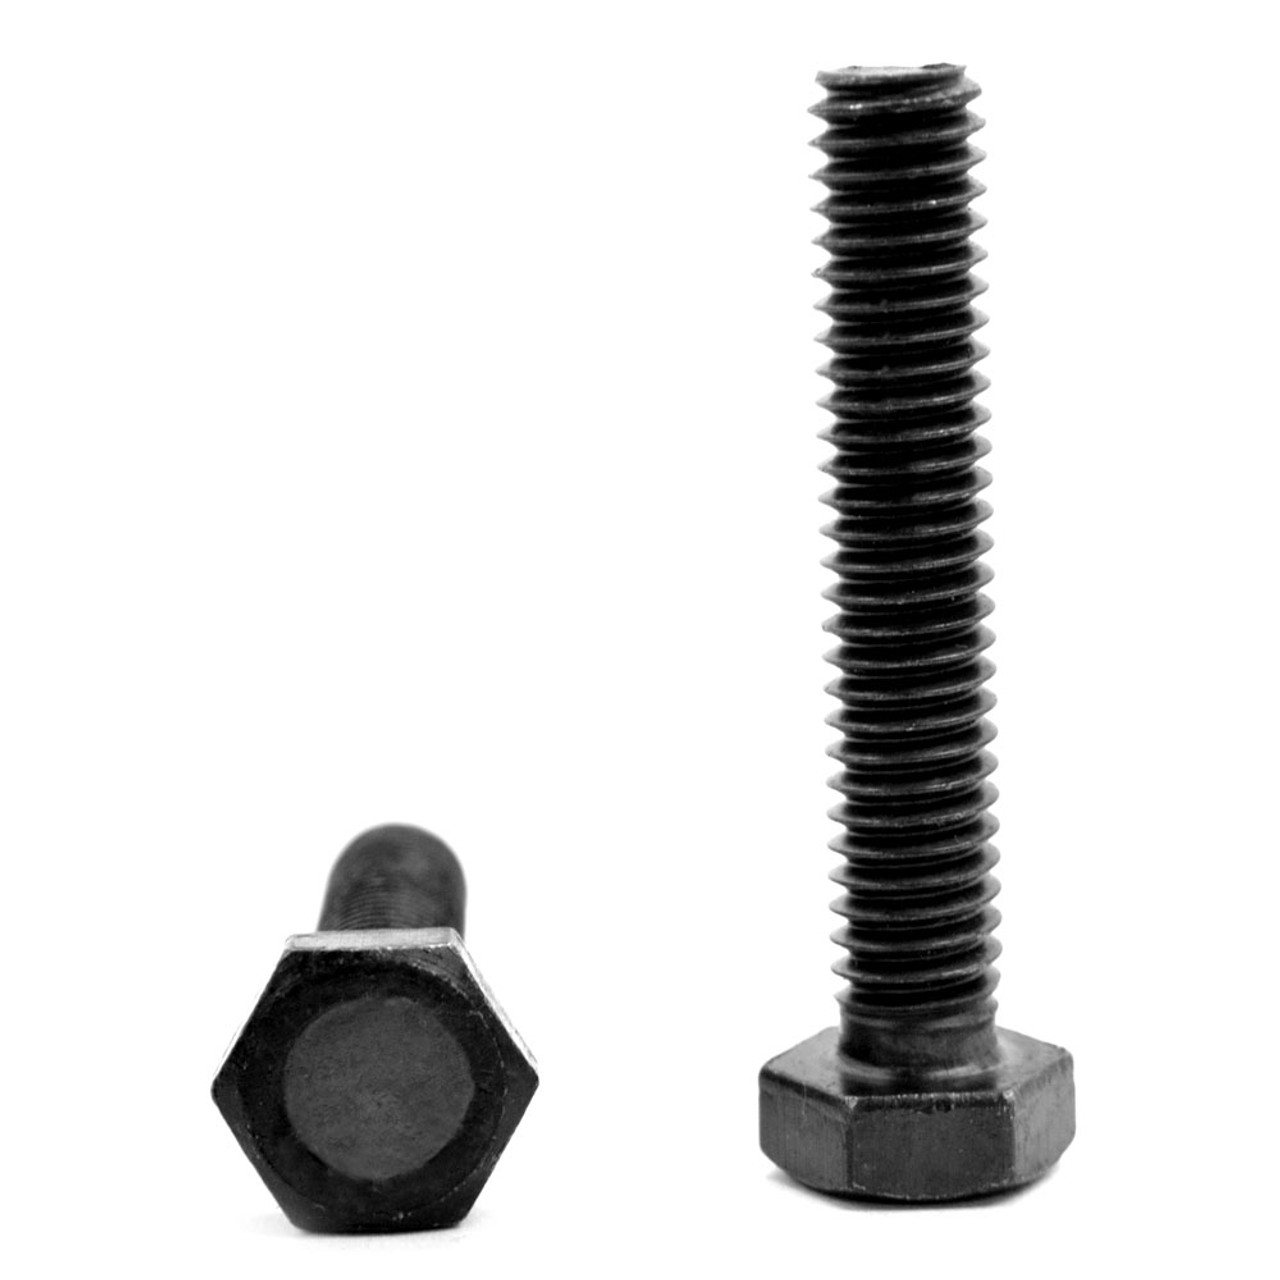 5/16-18 x 6 (FT) Coarse Thread Grade 8 Hex Tap (Full Thread) Bolt Alloy Steel Thermal Black Oxide